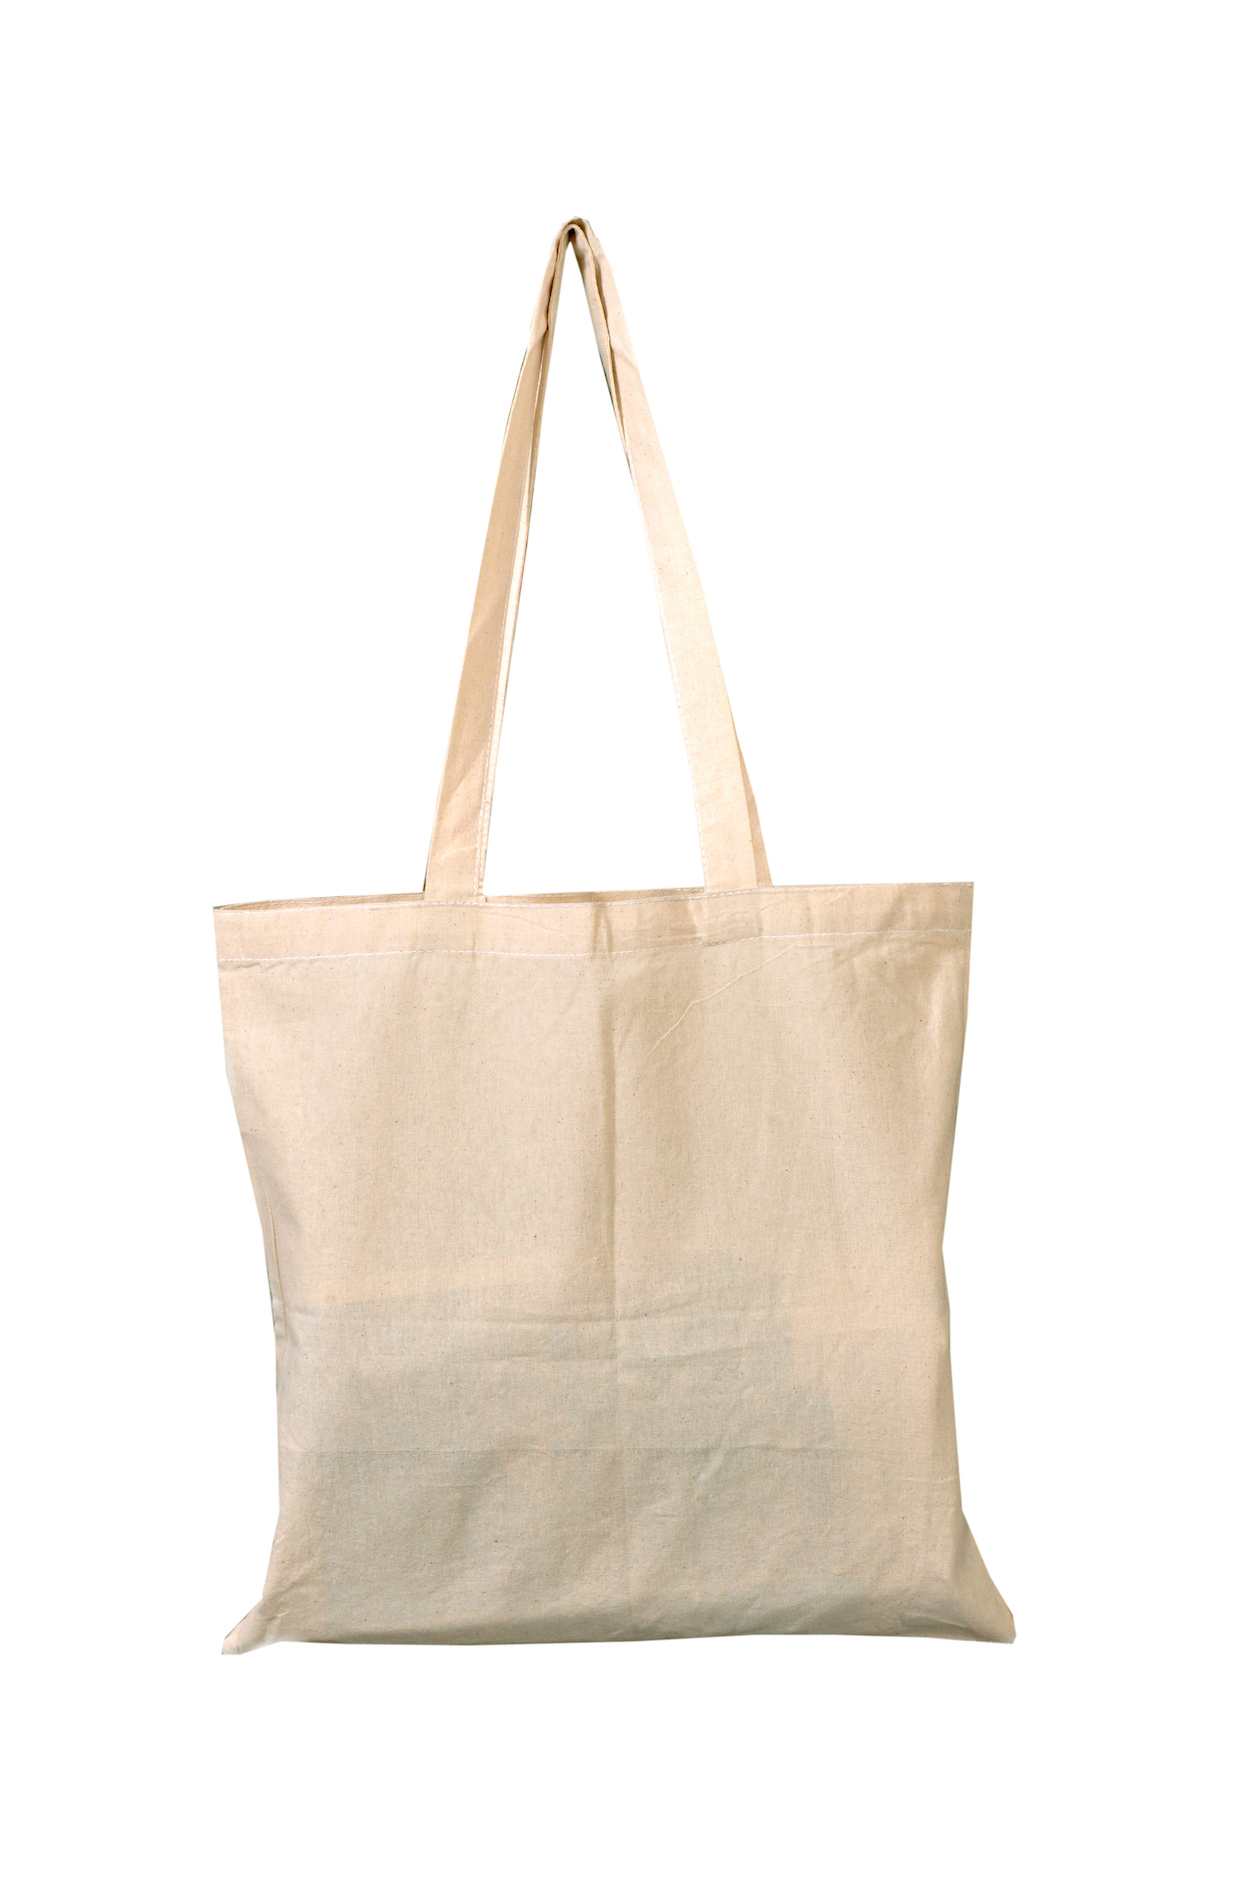 Offer on Cotton Bags 14 x 16 - Set of 25 Plain Tote Bags - No Plastic Shop